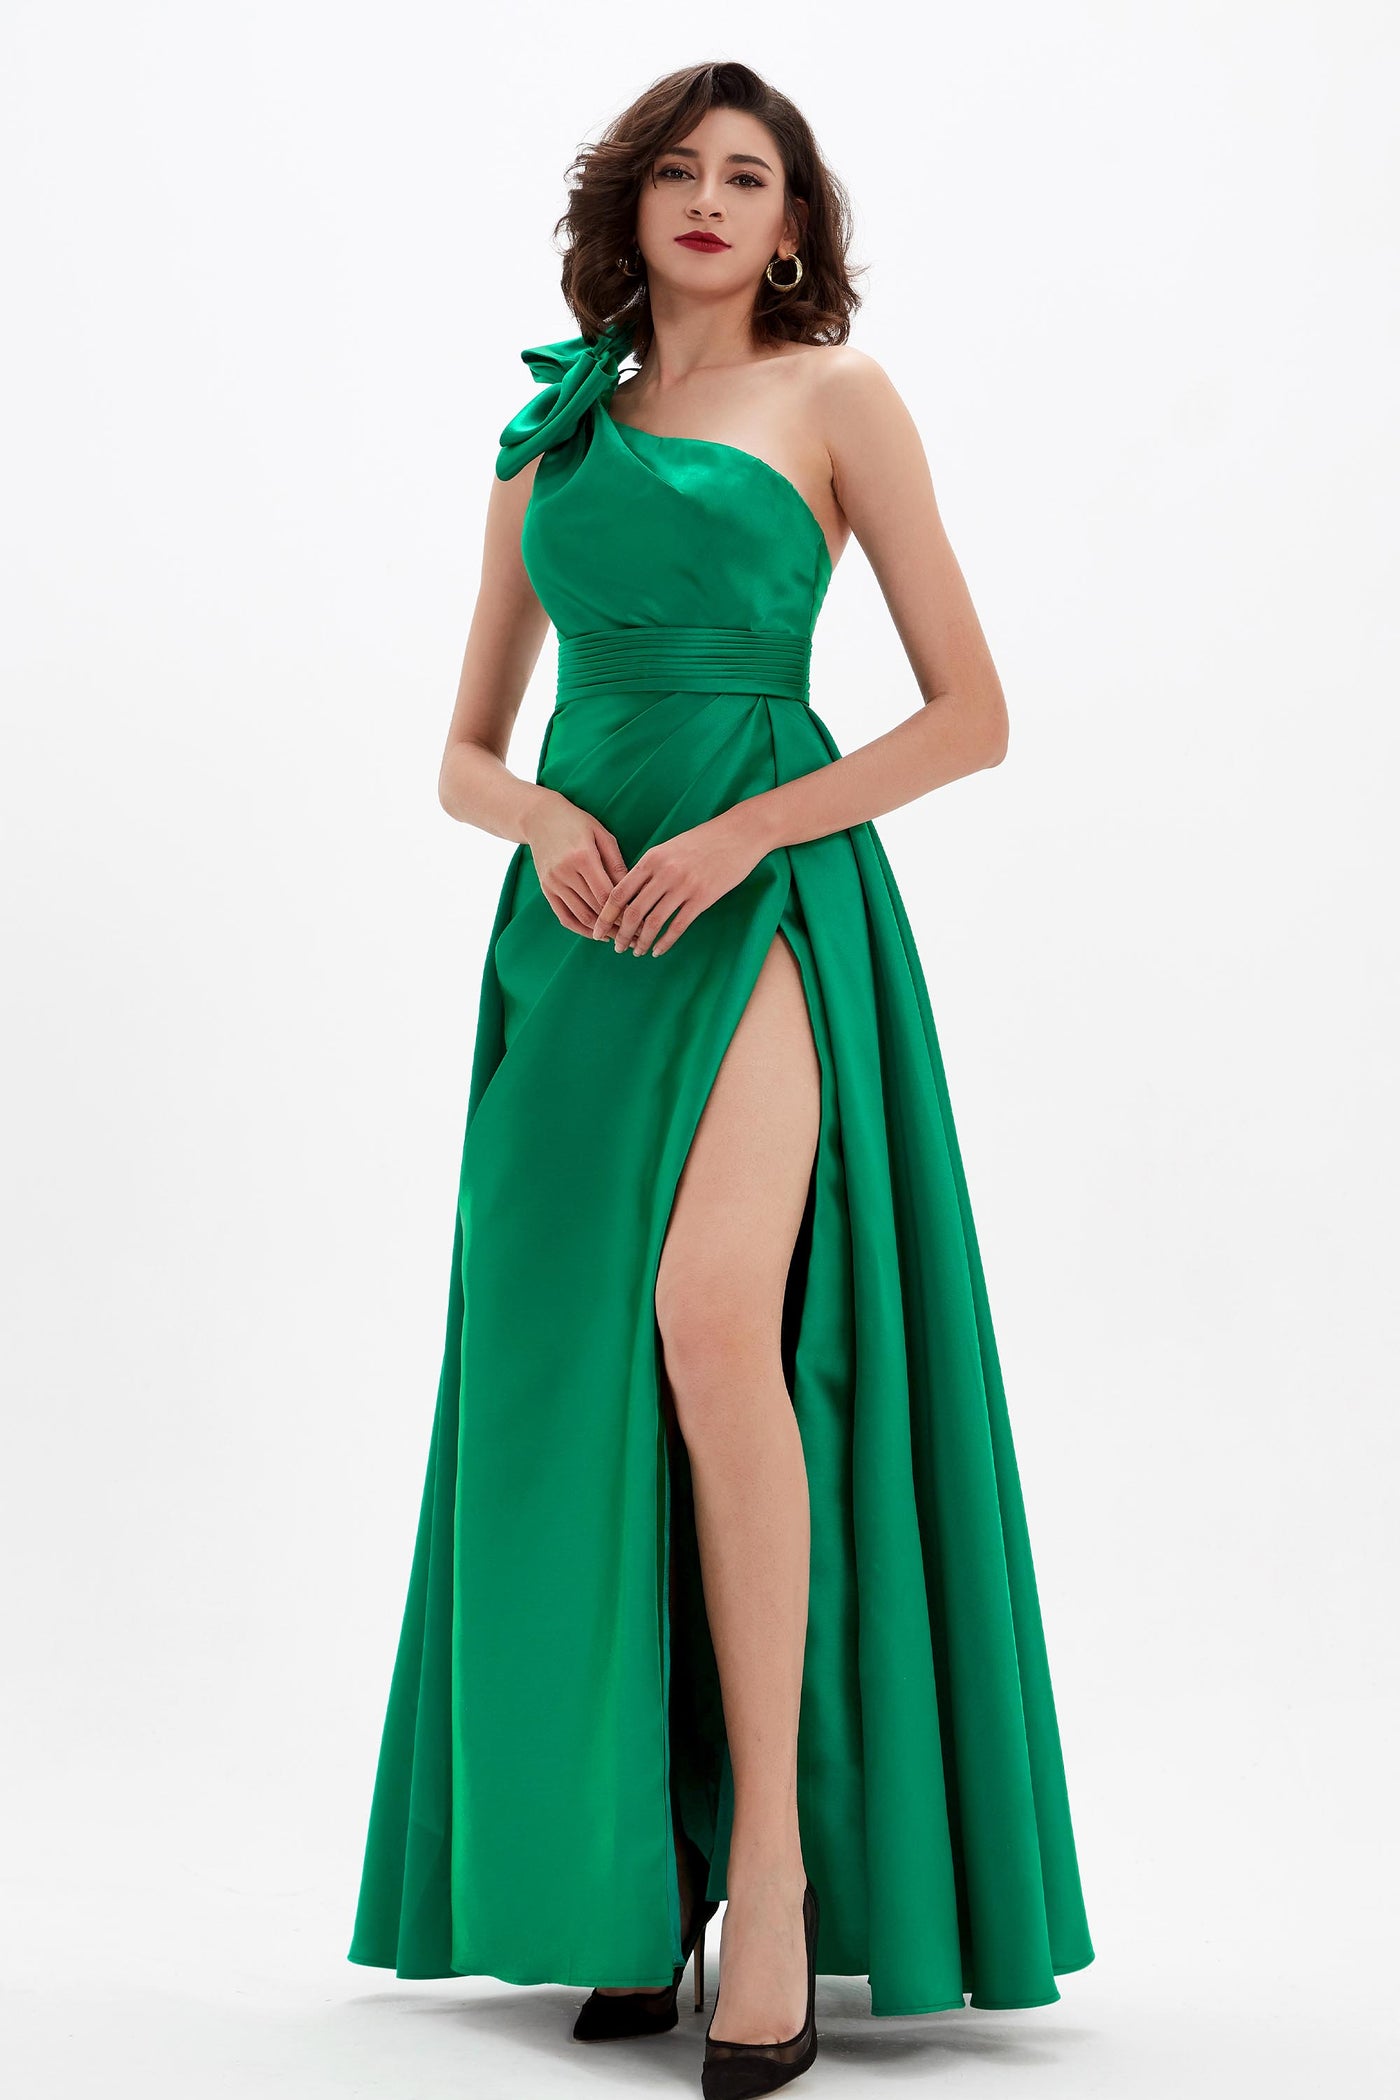 Green One Shoulder High Slit Long Party Prom Dress